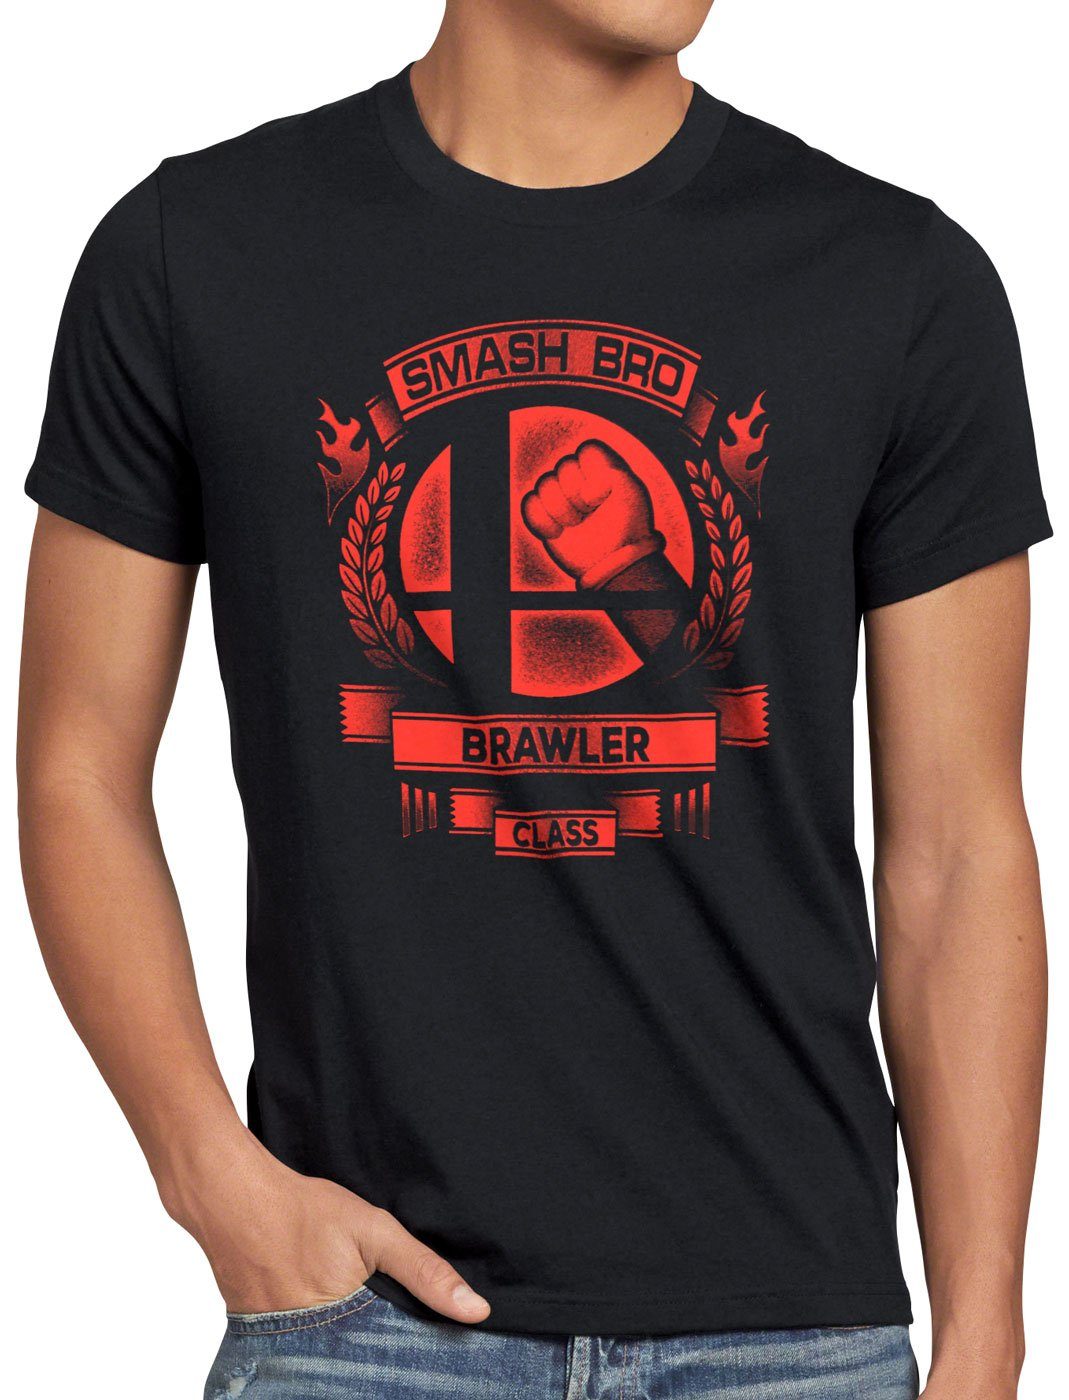 Print-Shirt Herren Brawler style3 switch ultimate Smash super schwarz brothers T-Shirt